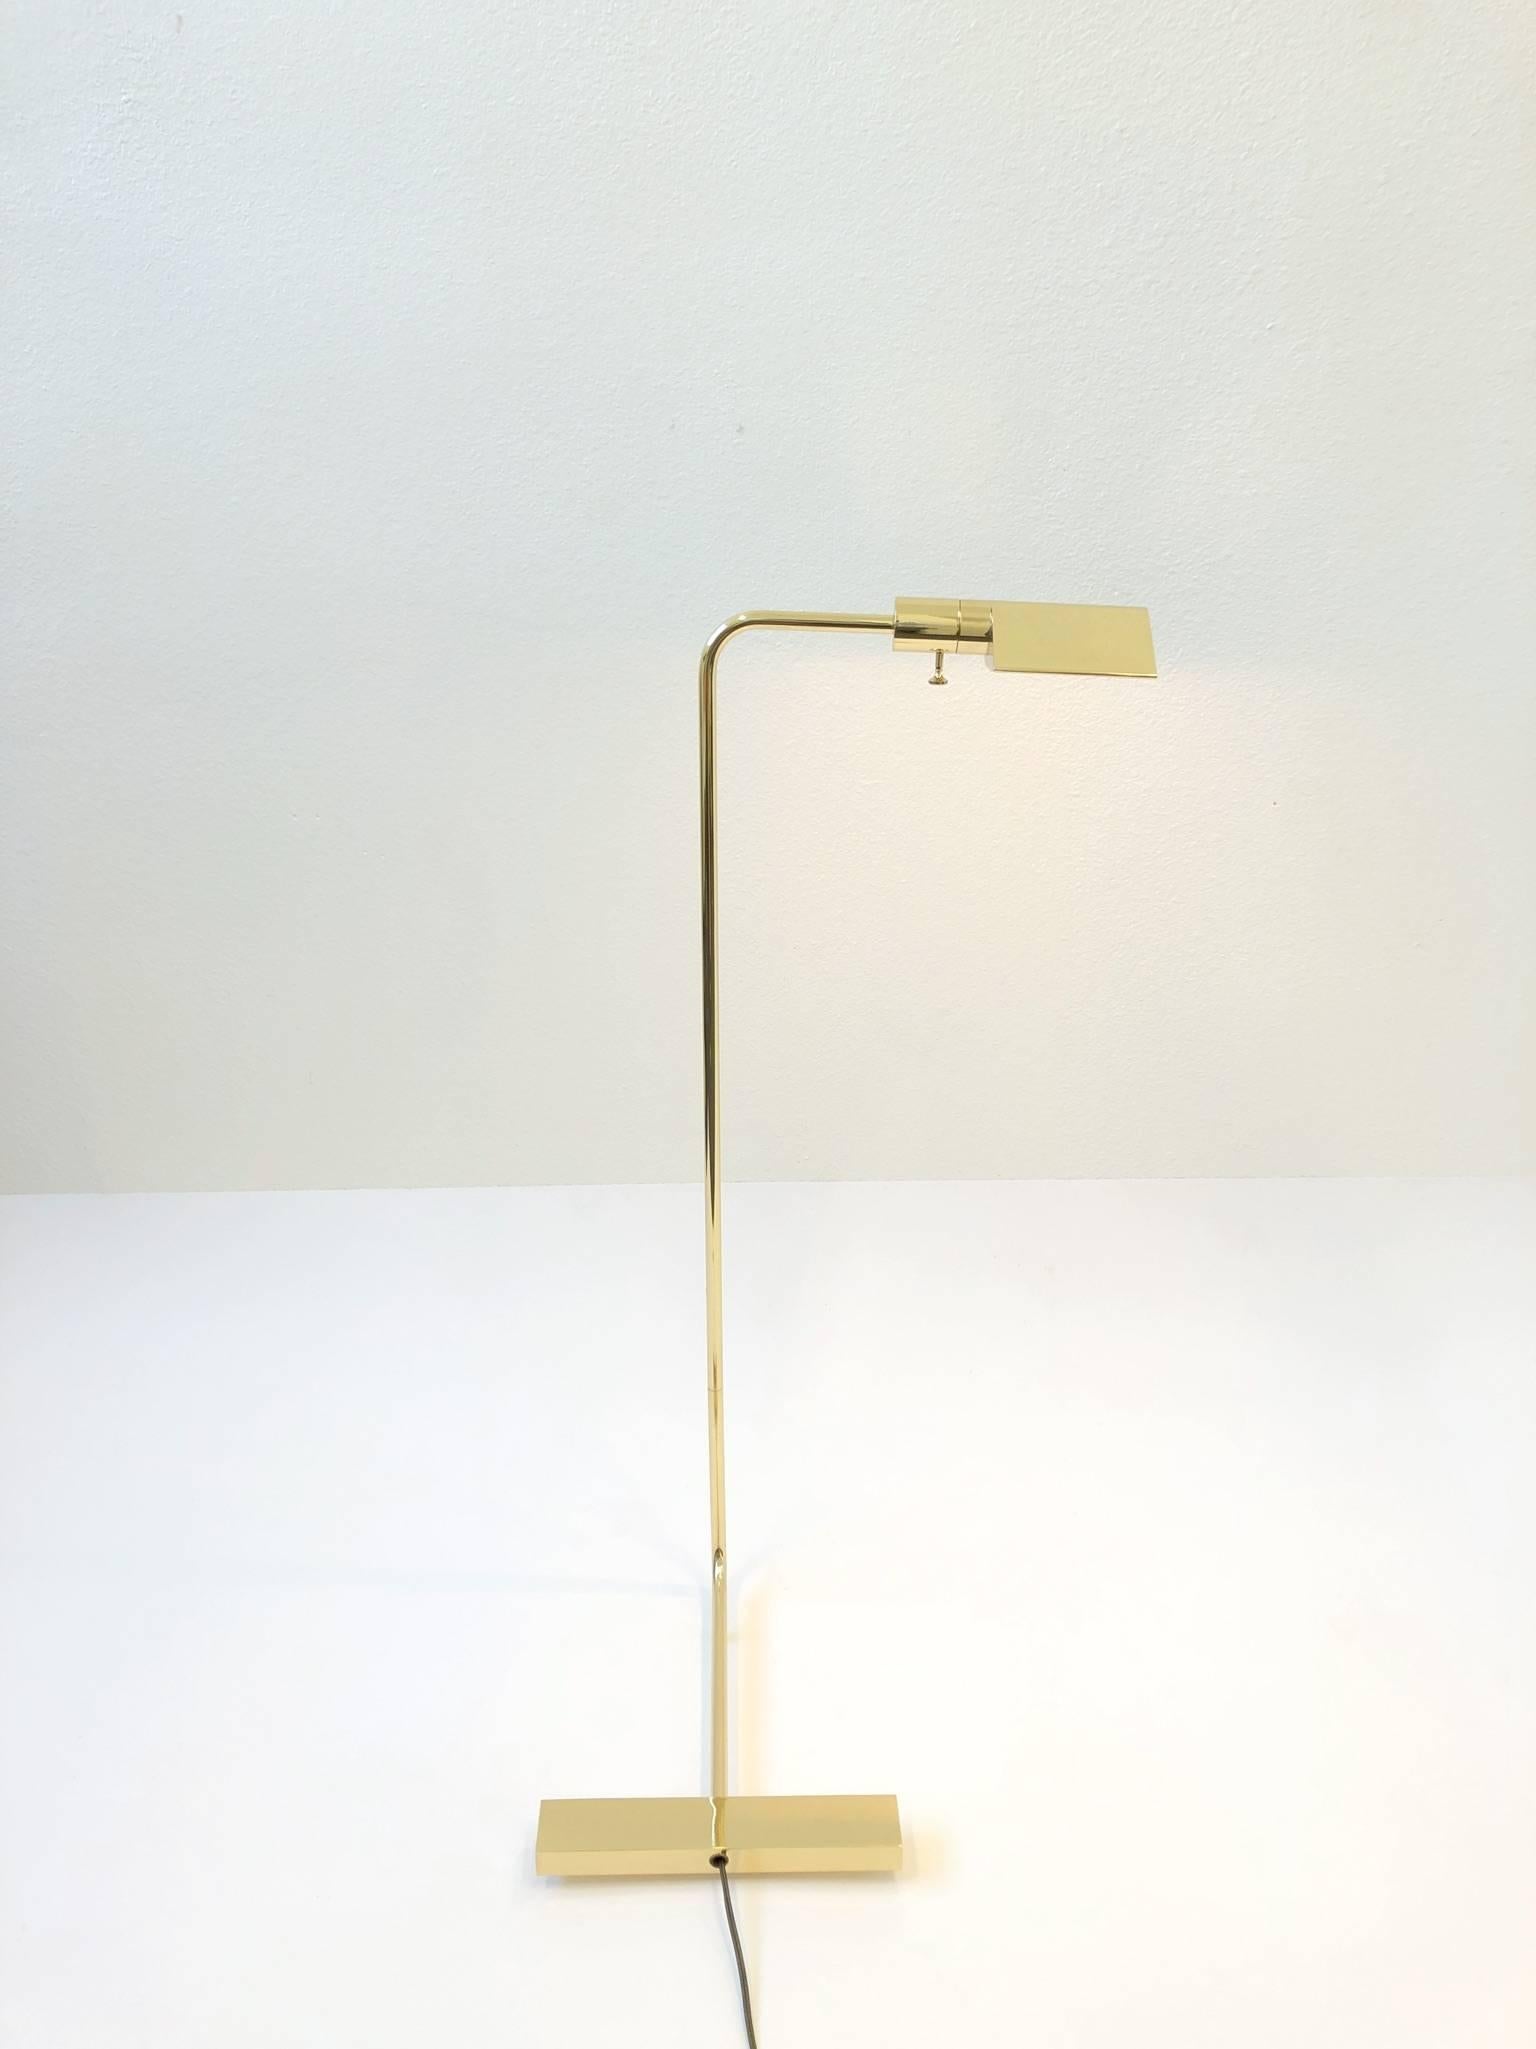 Polished Polish Brass Adjustable Floor Lamp by Cedric Hartman